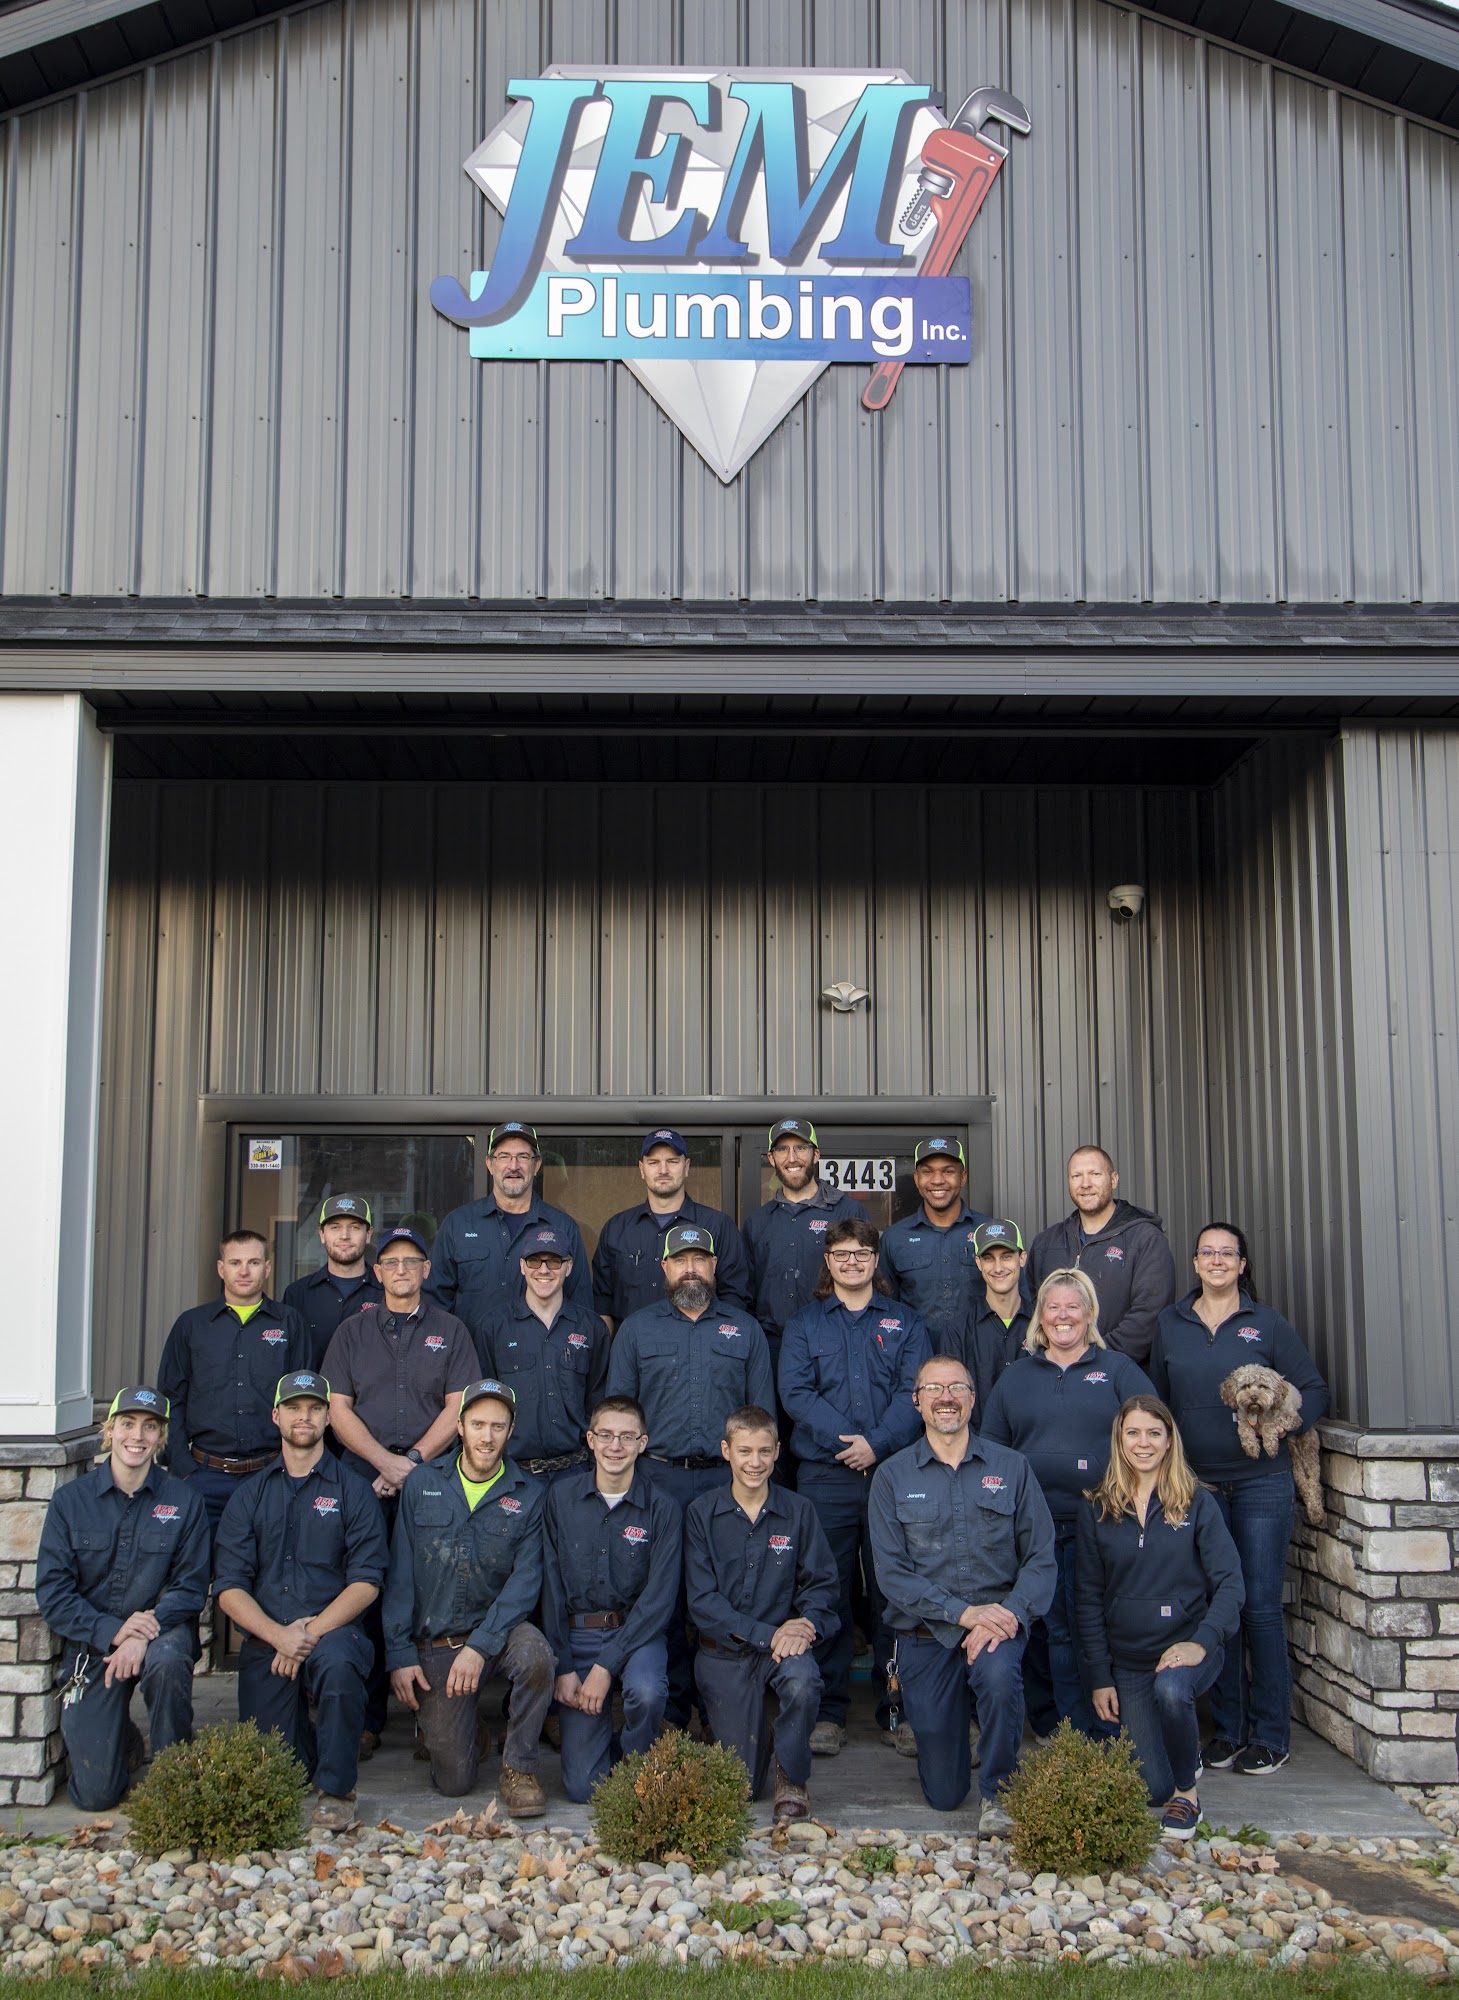 JEM Plumbing, Inc